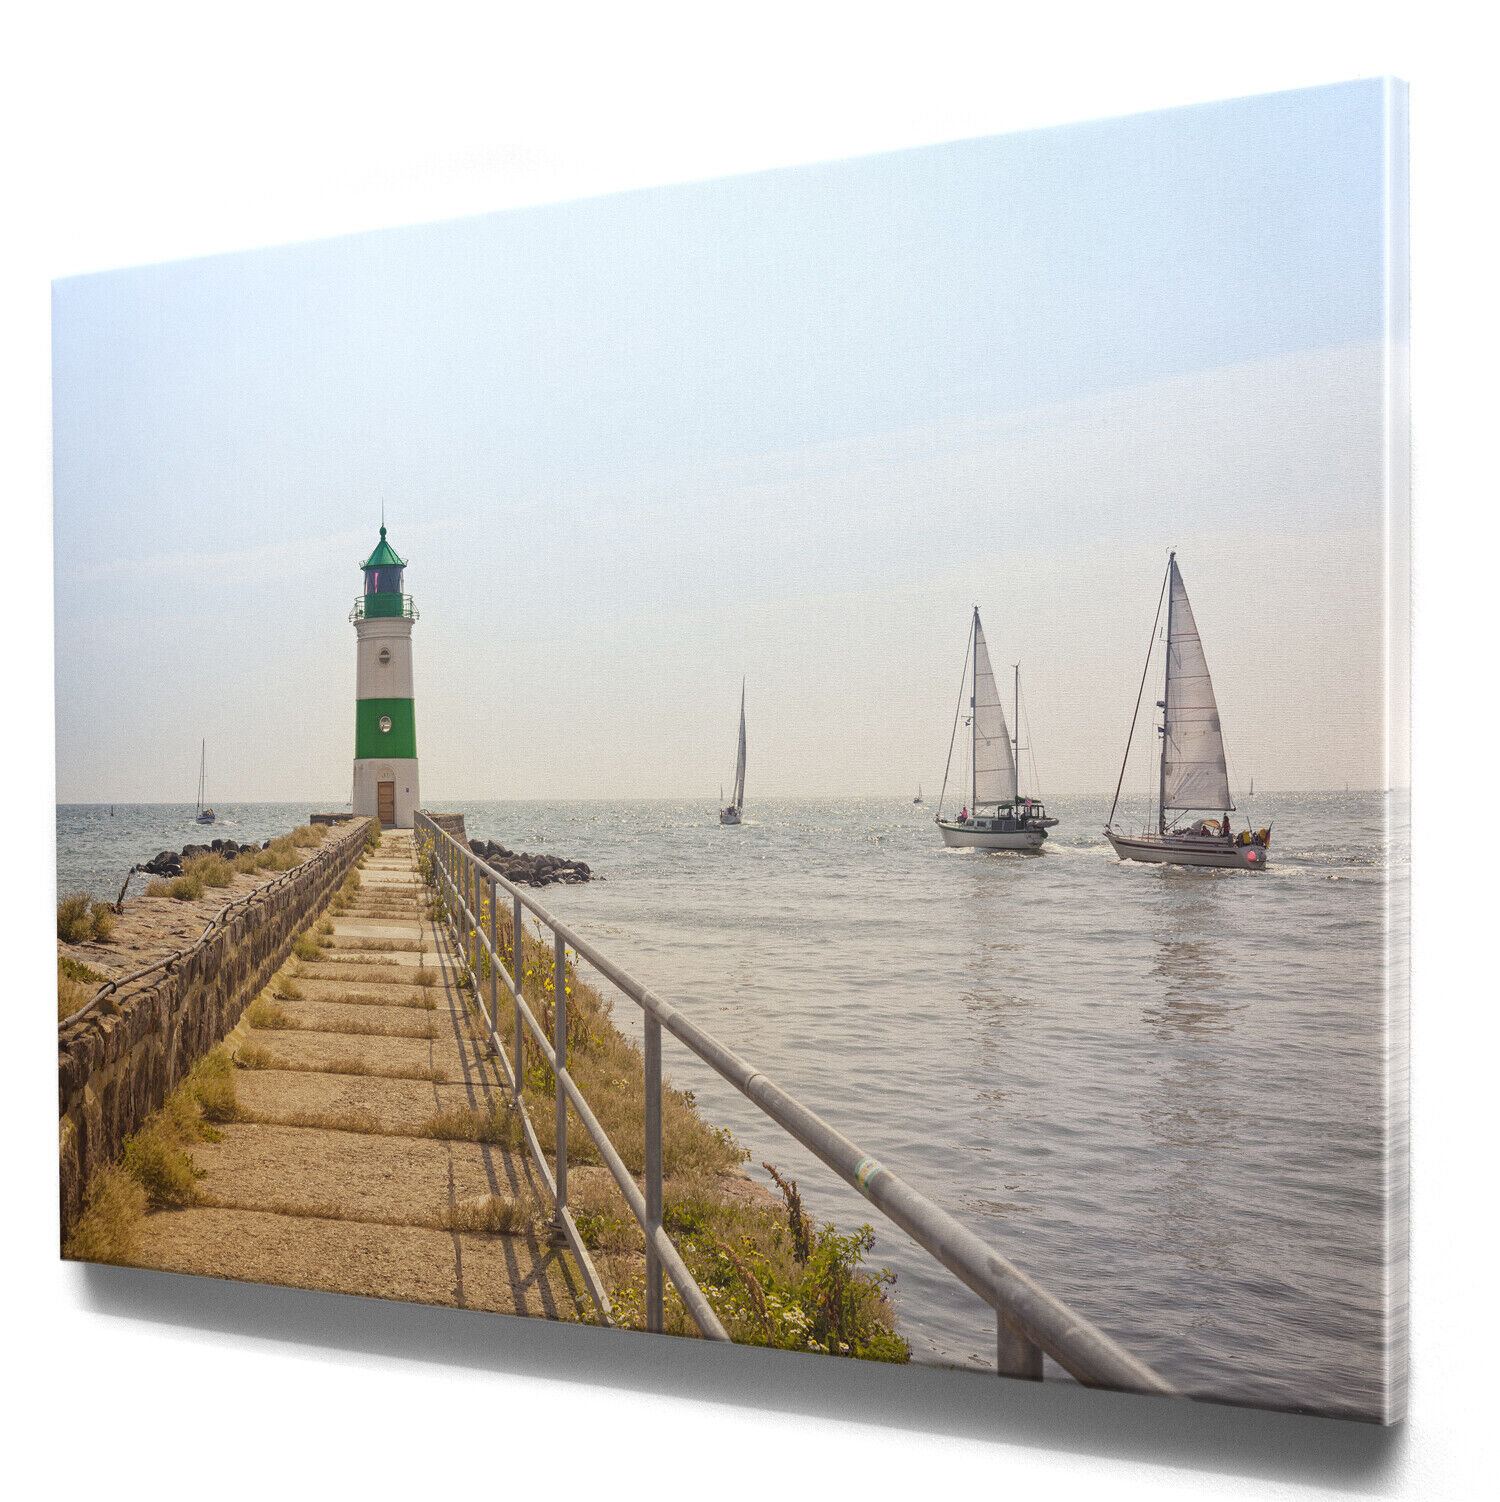 XXL Ostsee Bilder als Leinwandbild im Großformat bis 2 Meter. Strand Dünen Meer